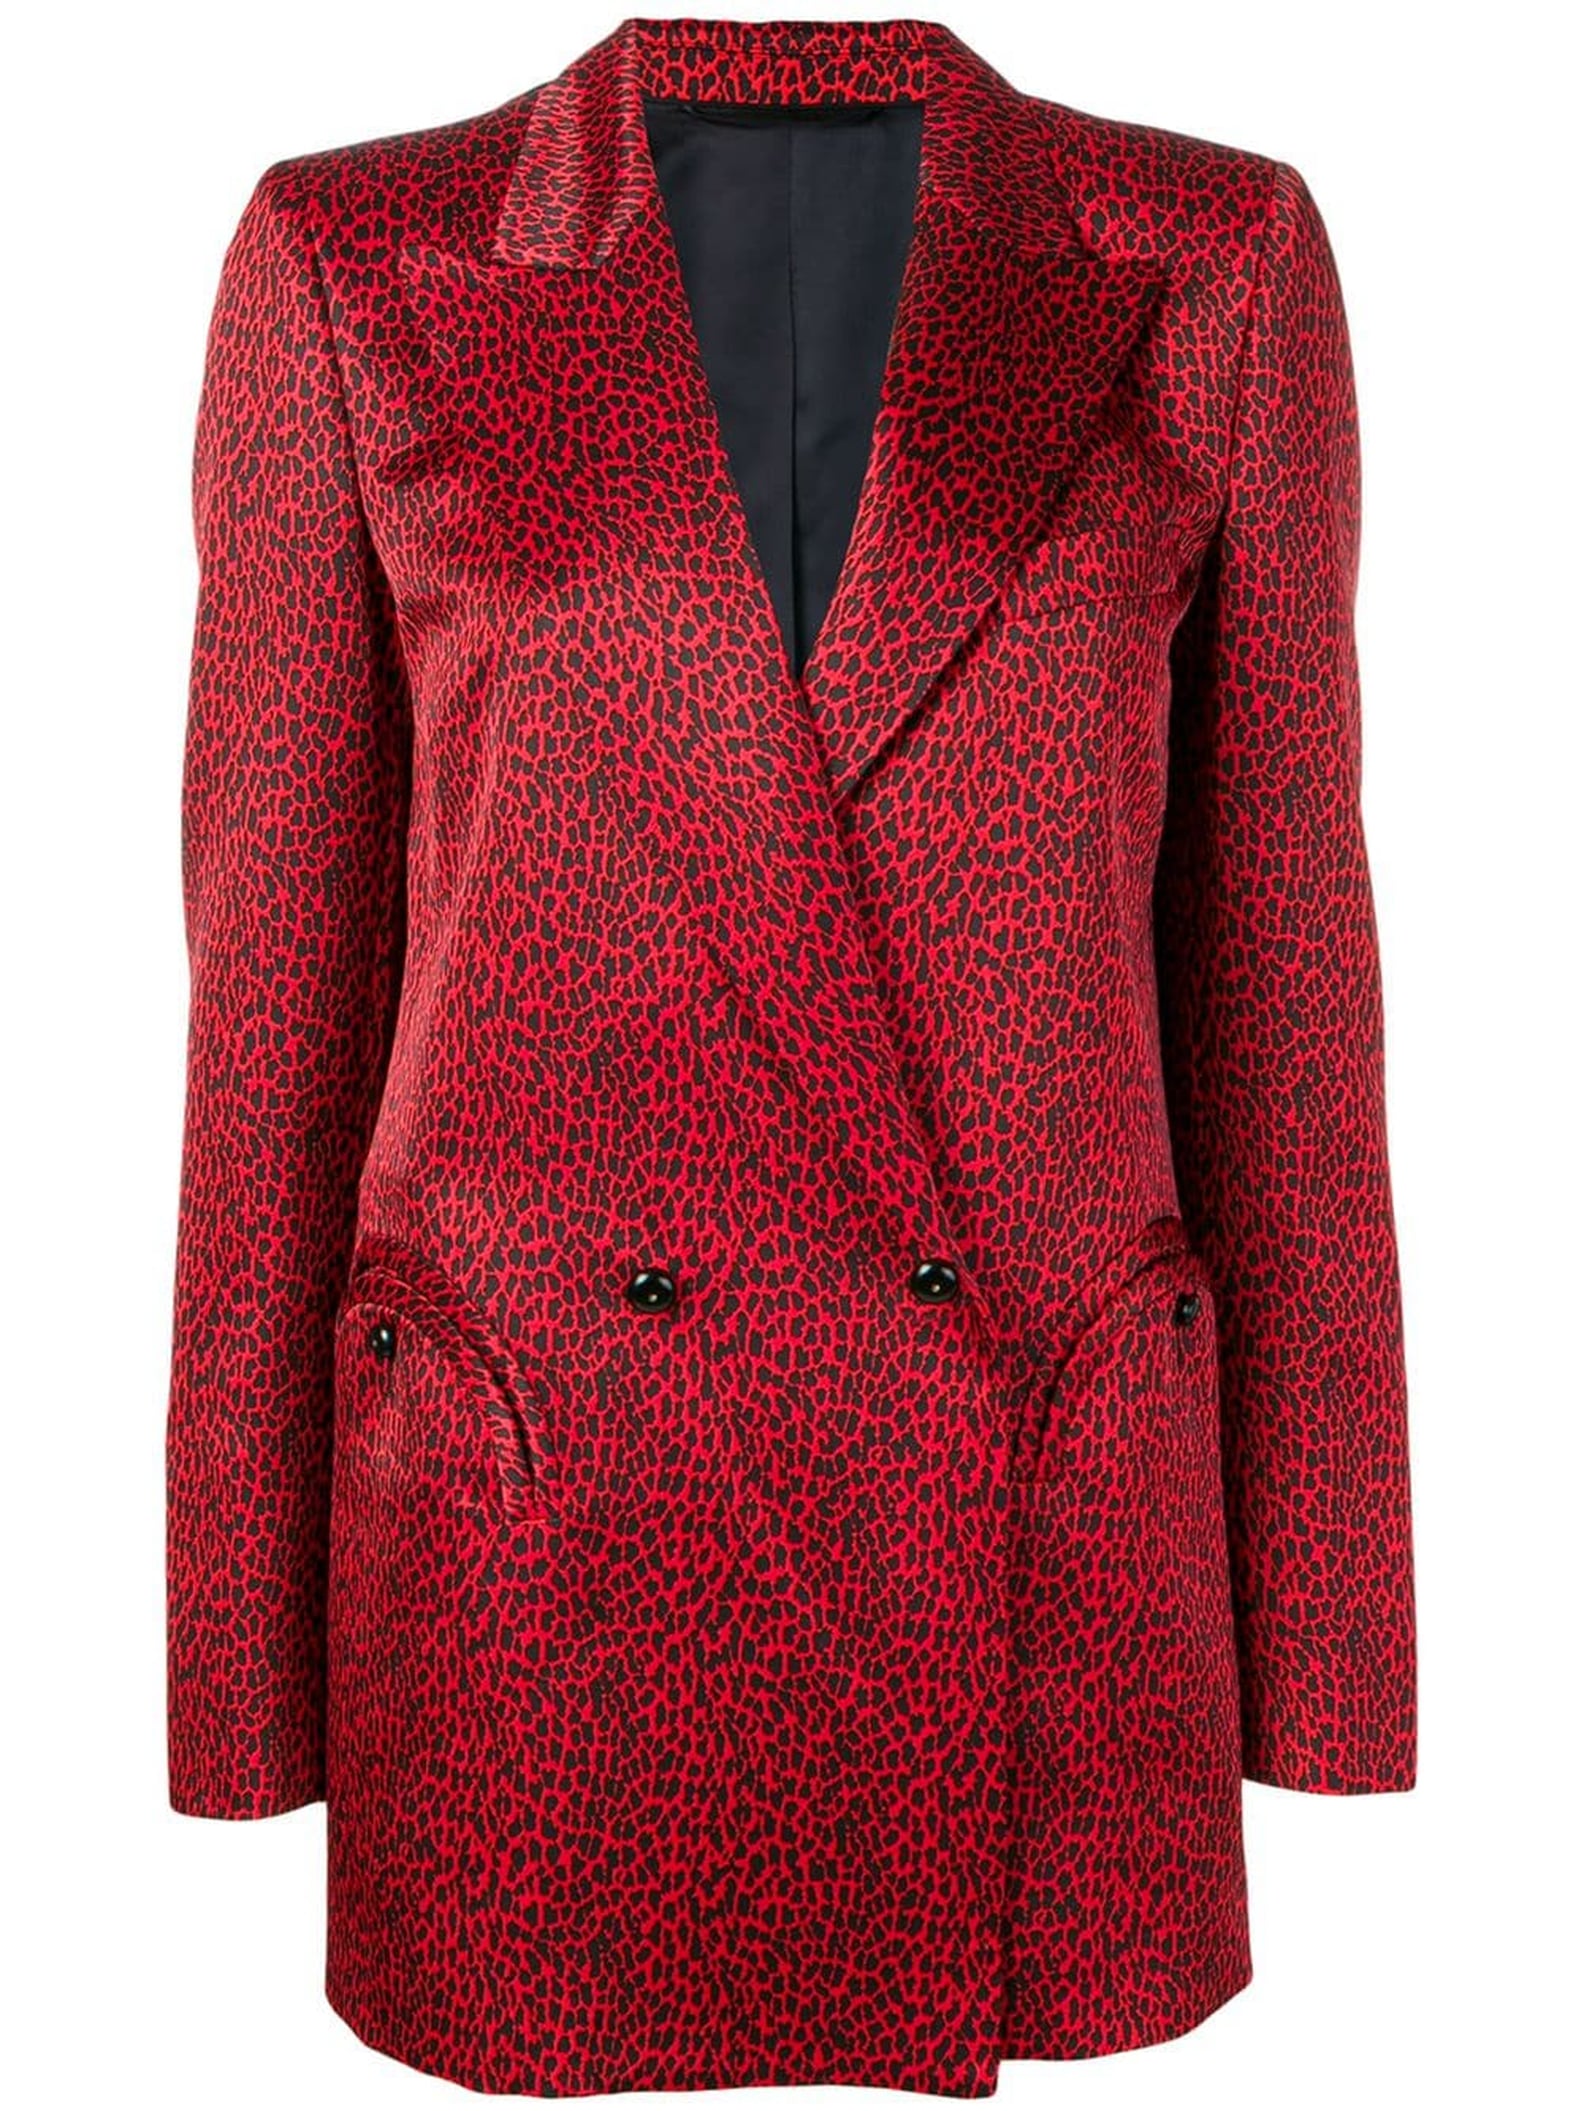 Hailey Baldwin Red Animal Print Blazer and Black Hoodie | POPSUGAR Fashion